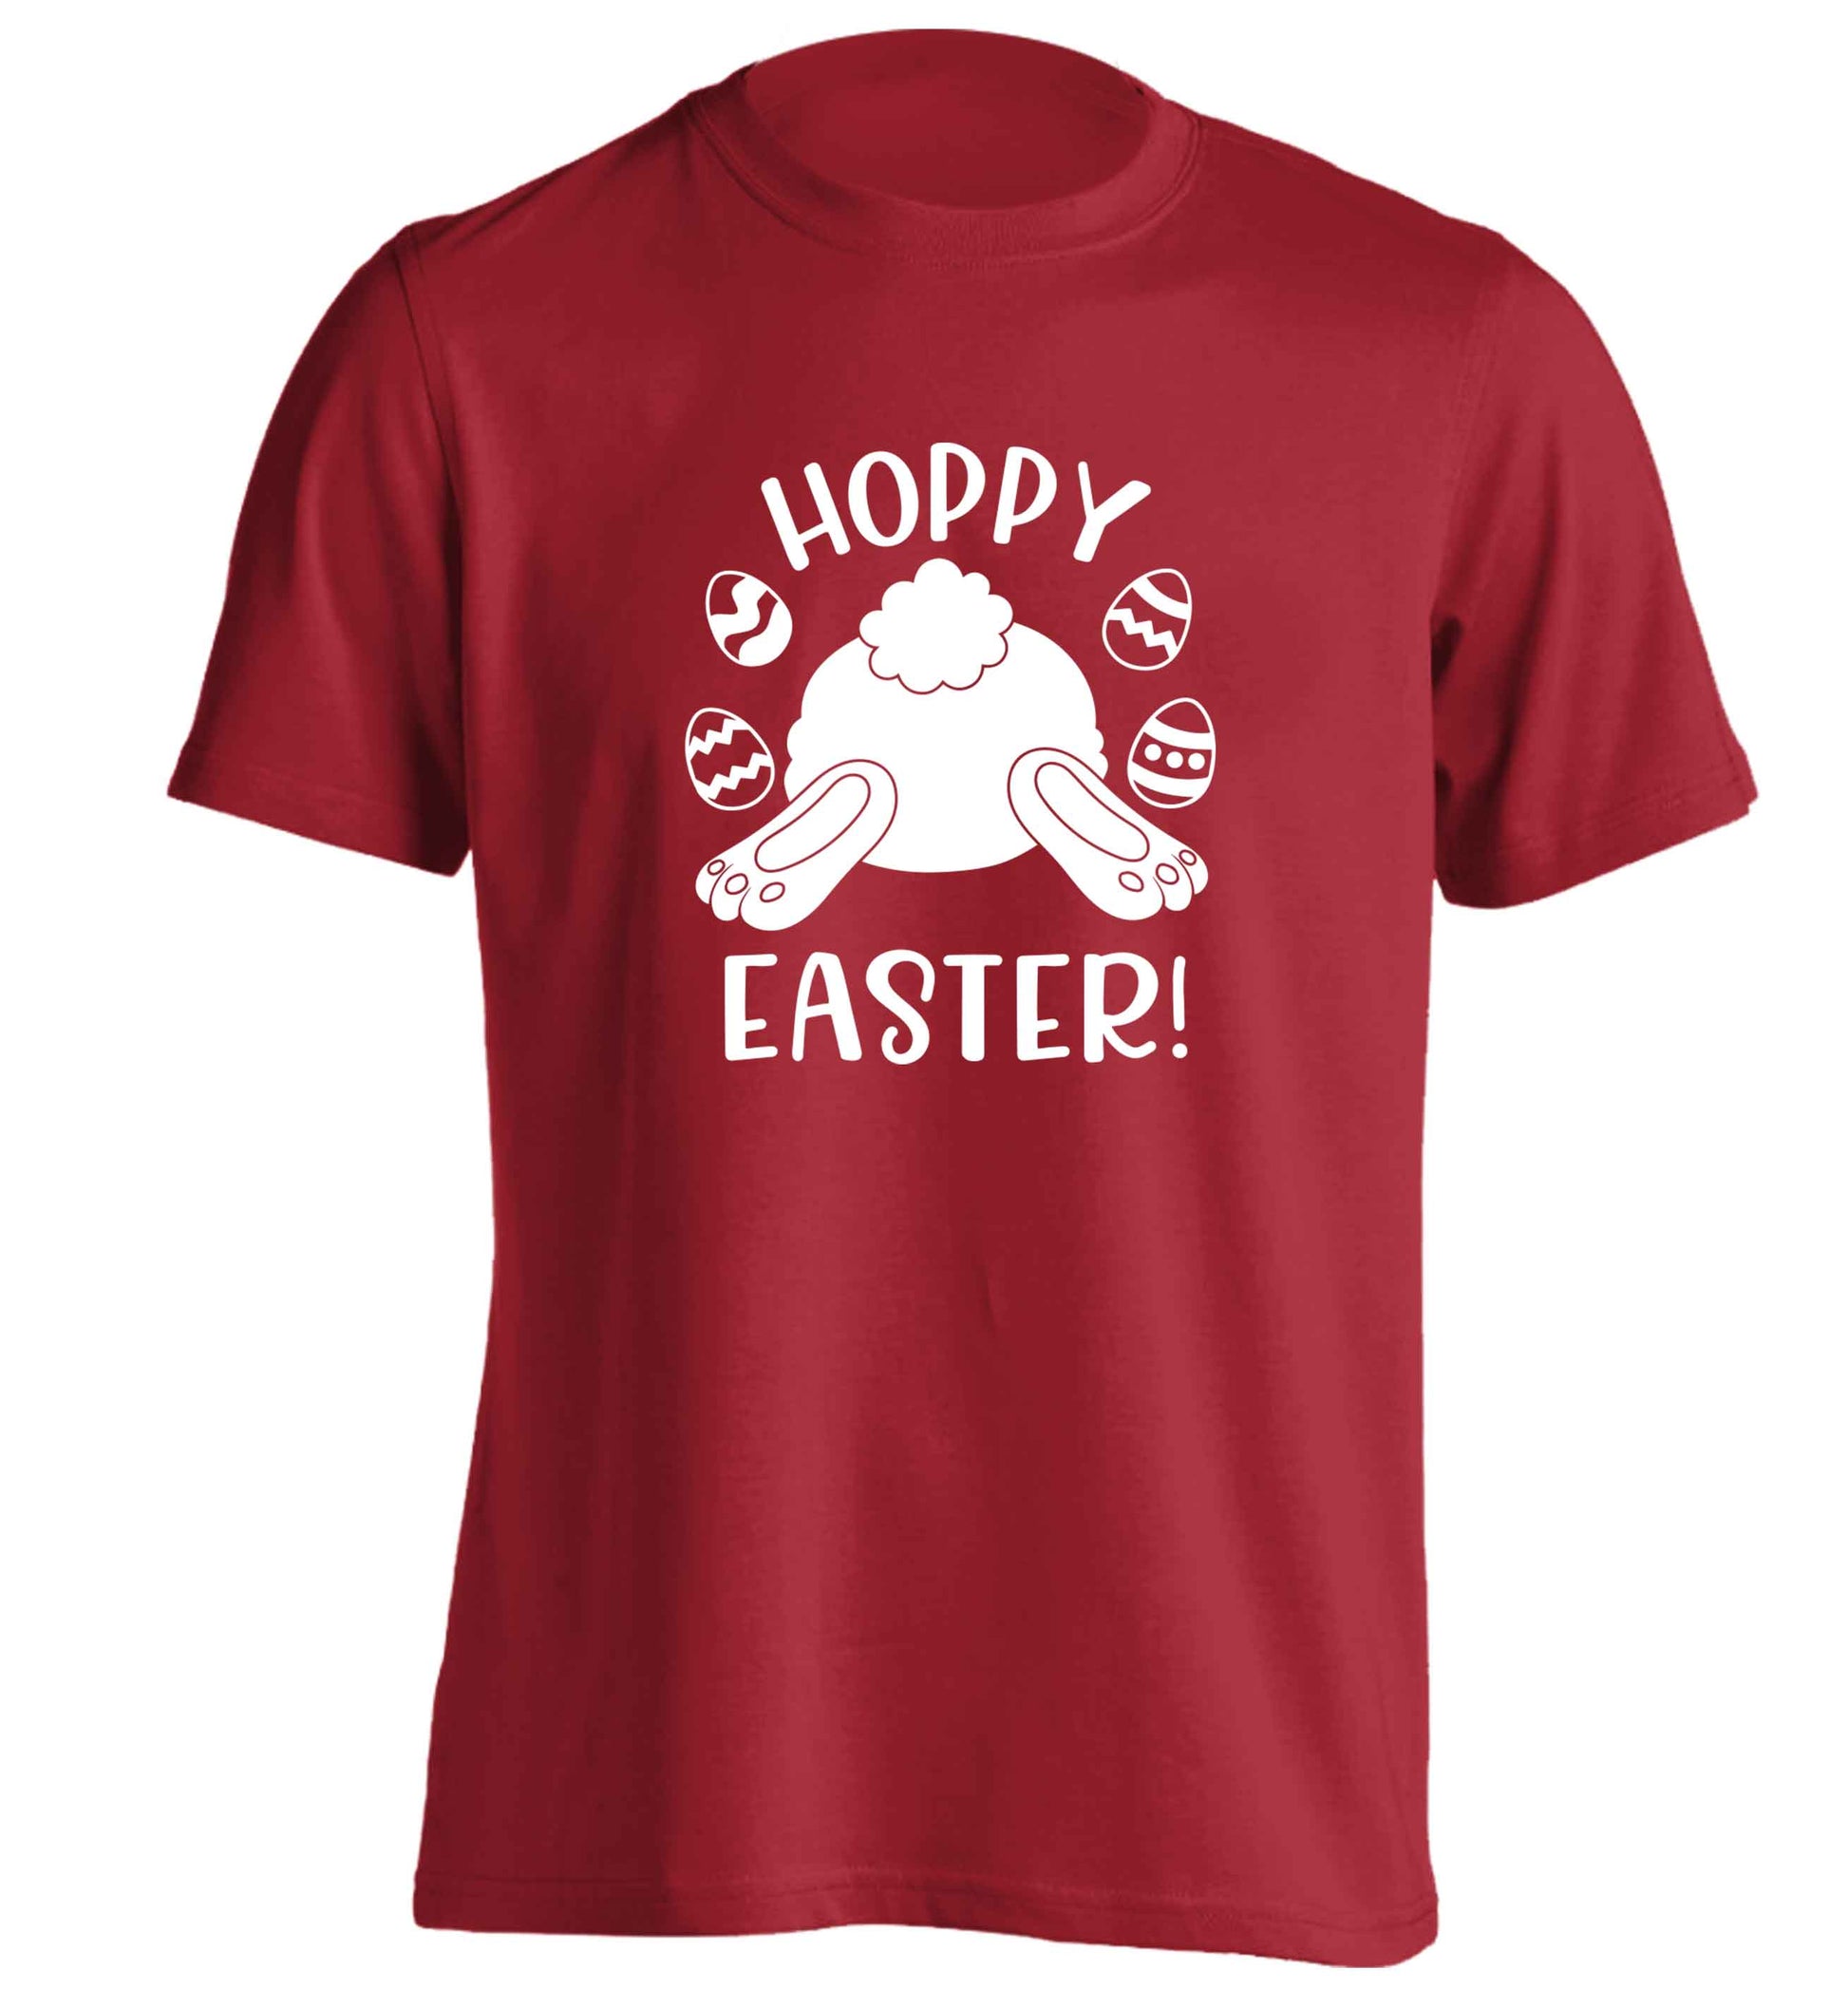 Hoppy Easter adults unisex red Tshirt 2XL